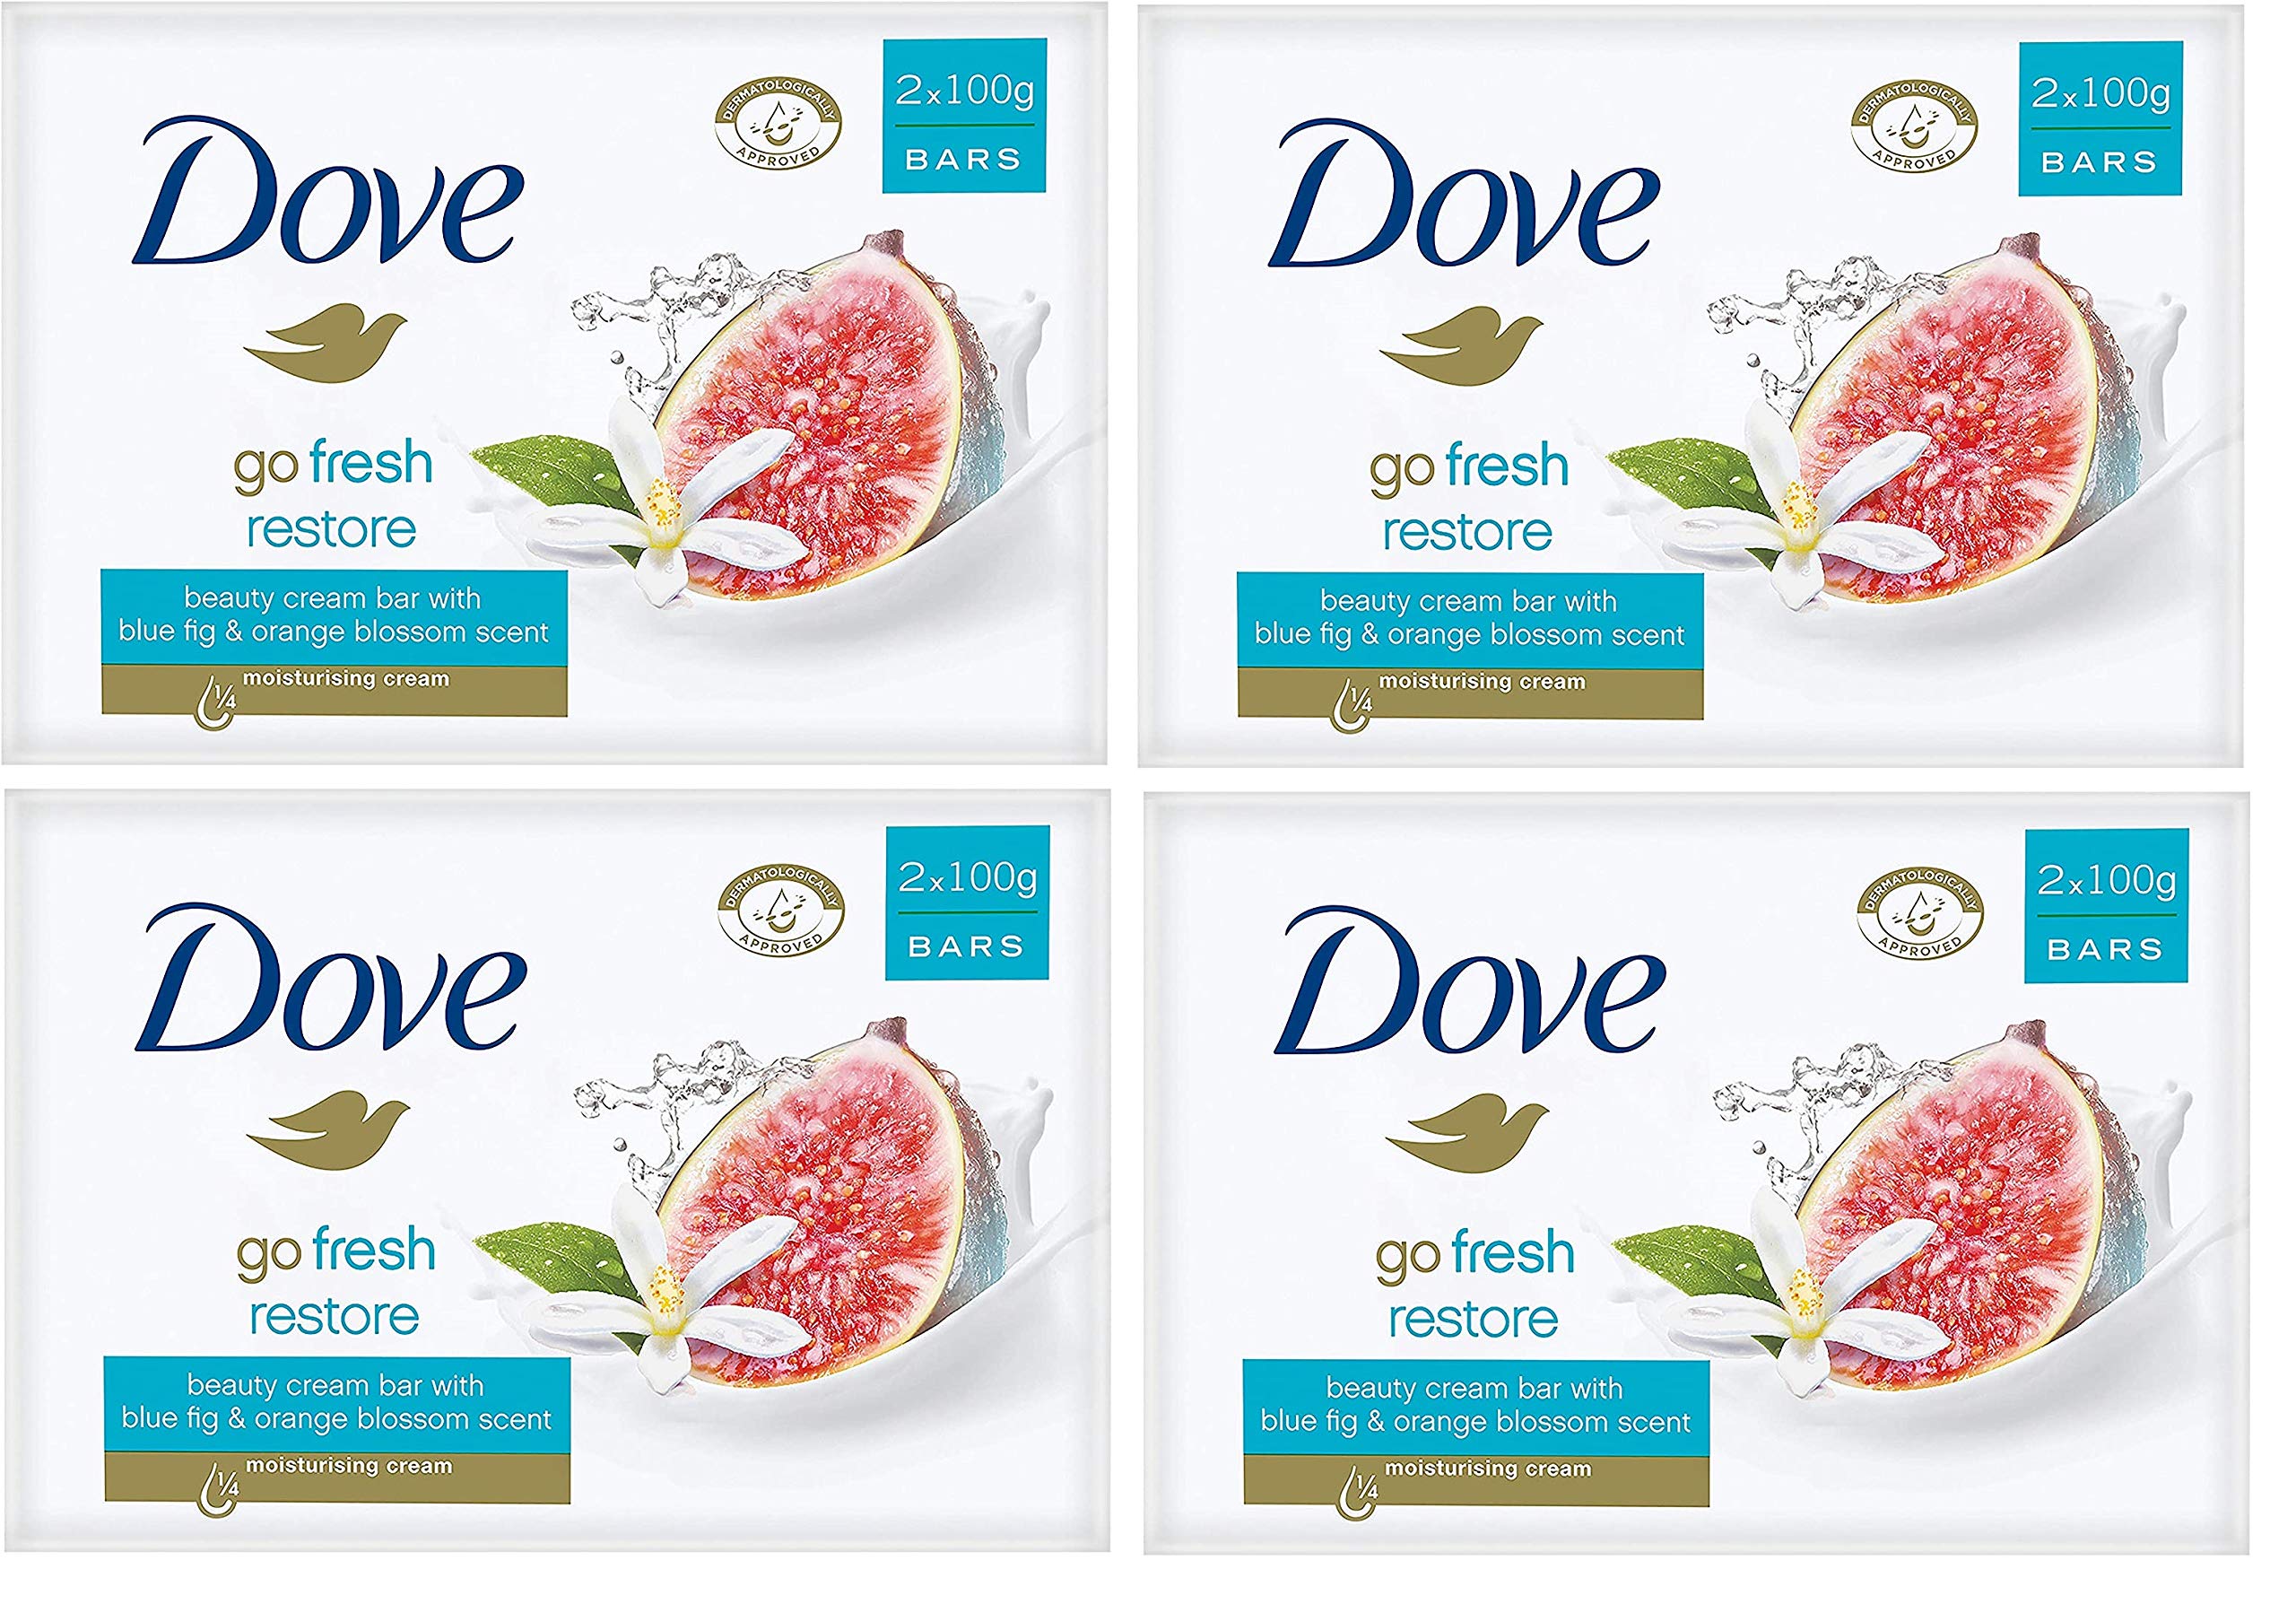 Dove Go Fresh Restore Beauty Cremeseife, 8 Riegel, 2 x 100 g, 4 Packungen